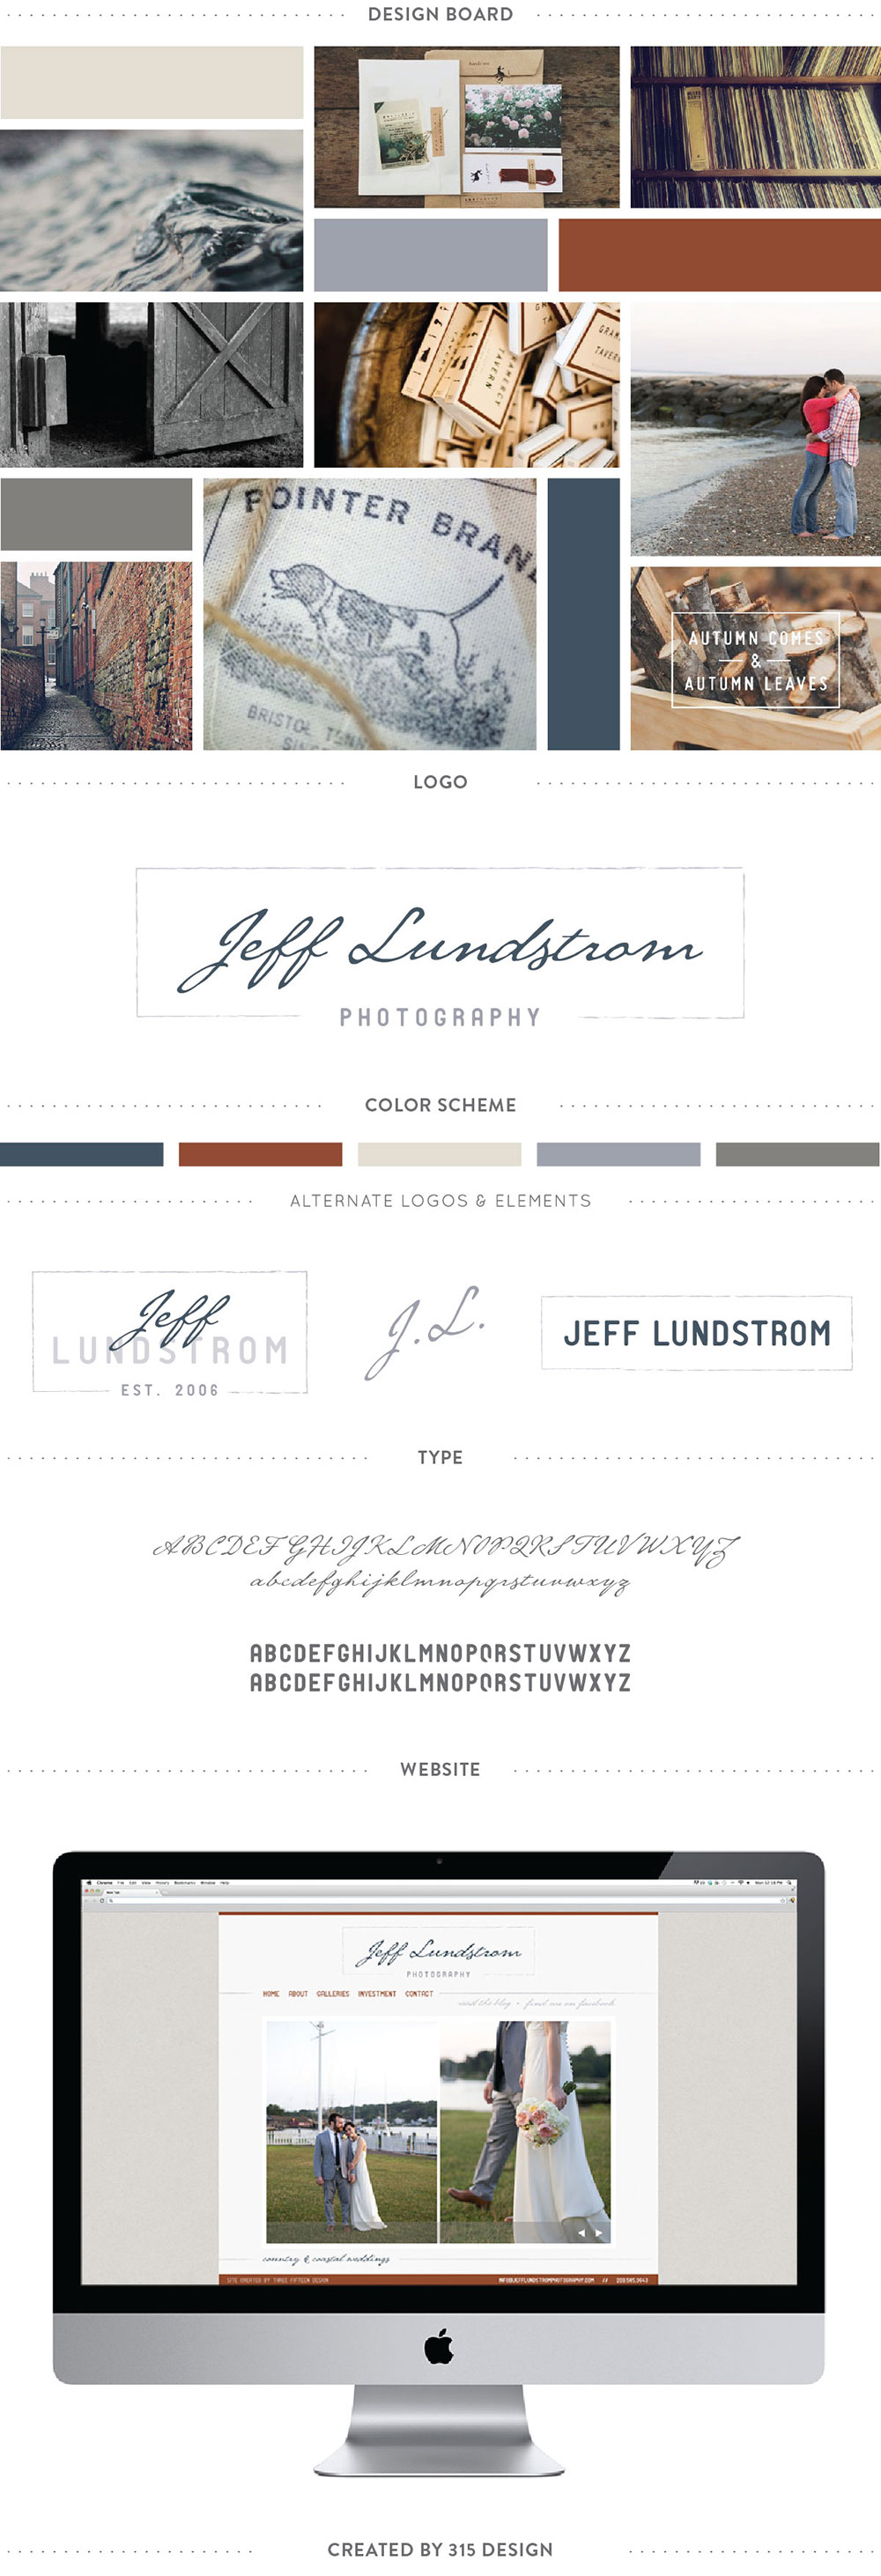 Jeff-Lundstrom-Logo-by-315-Design